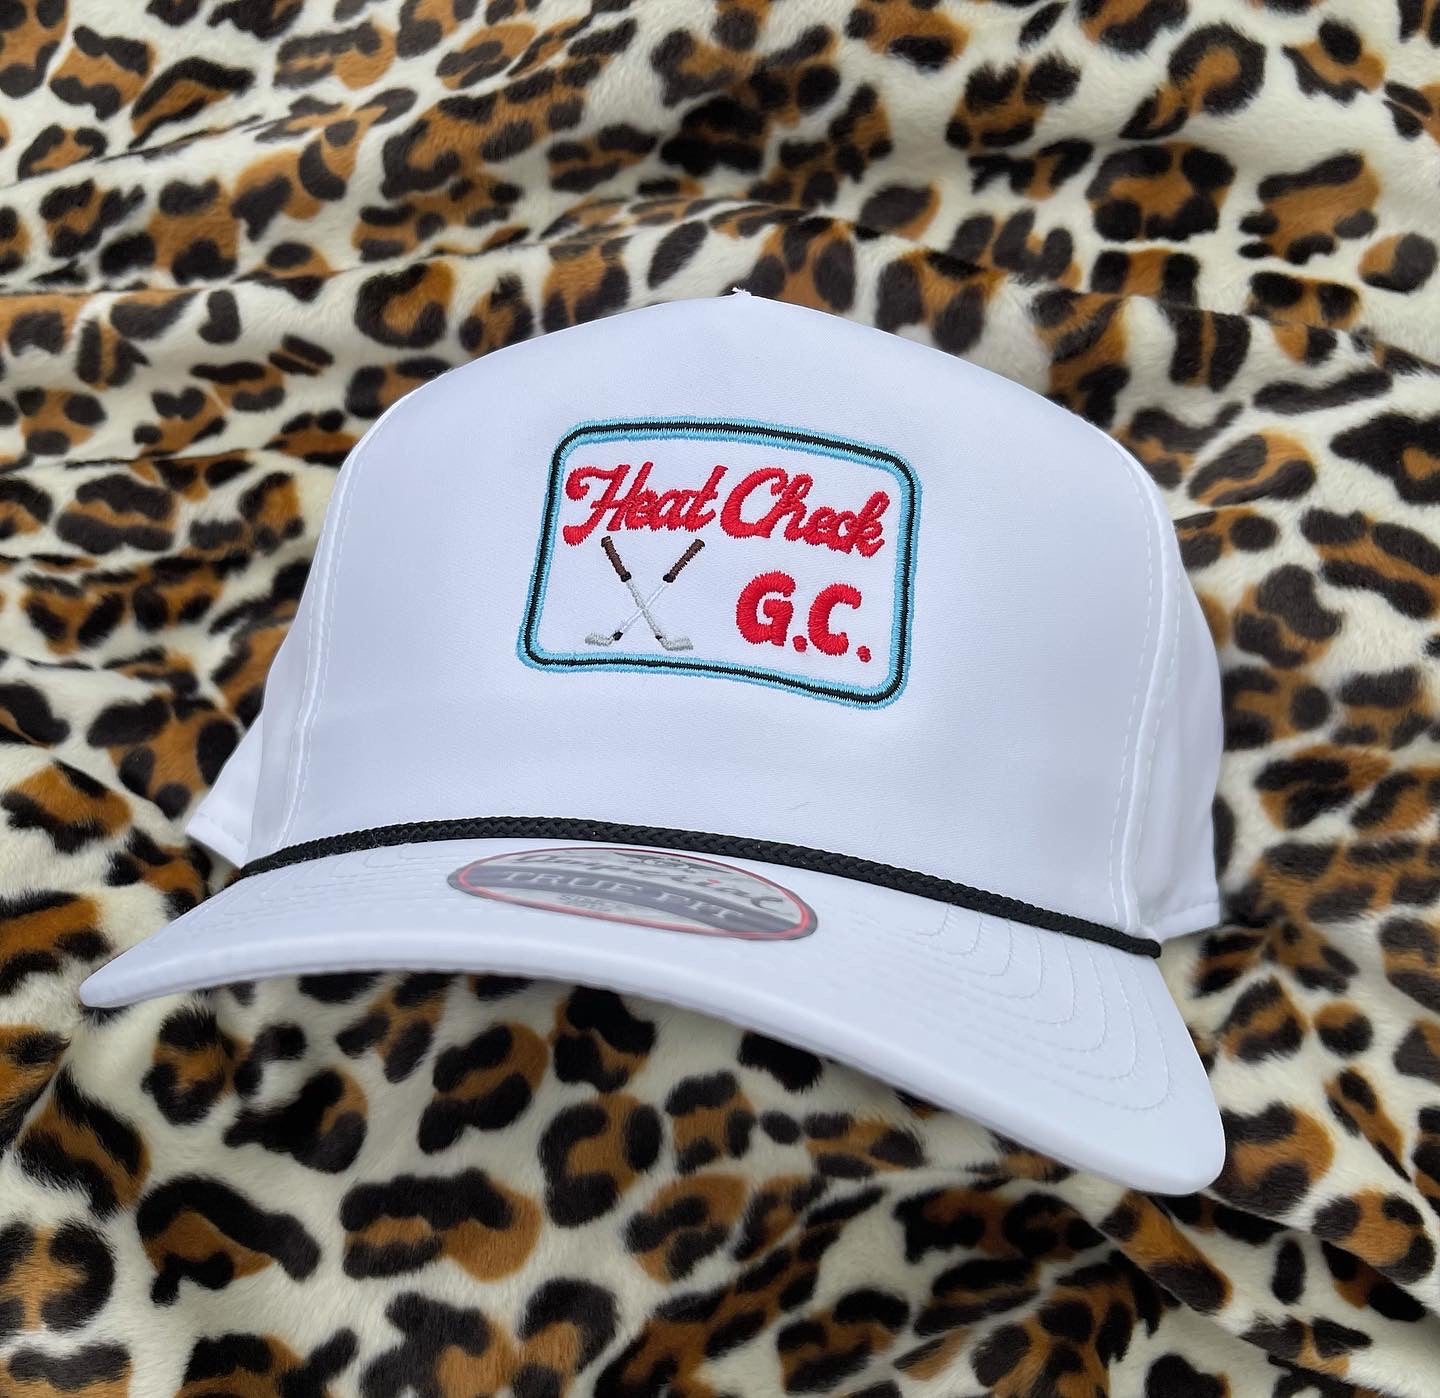 Heat Check Golf Club Rope Hat